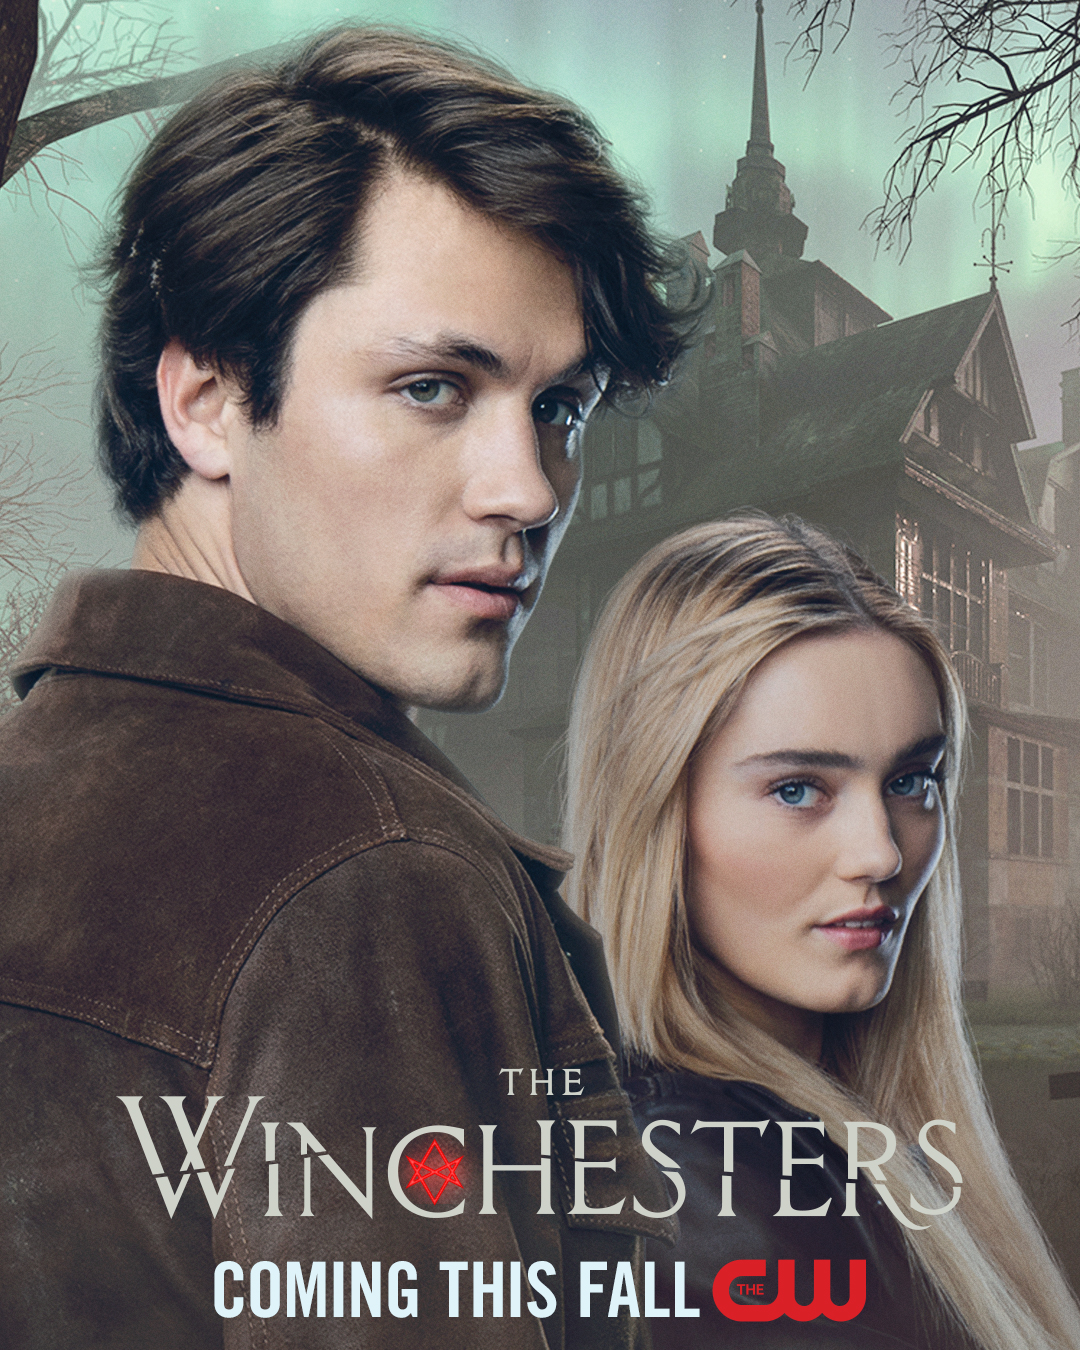  The Winchesters S01E04 (EN)[WebRip][1080p] = CSFD 56%